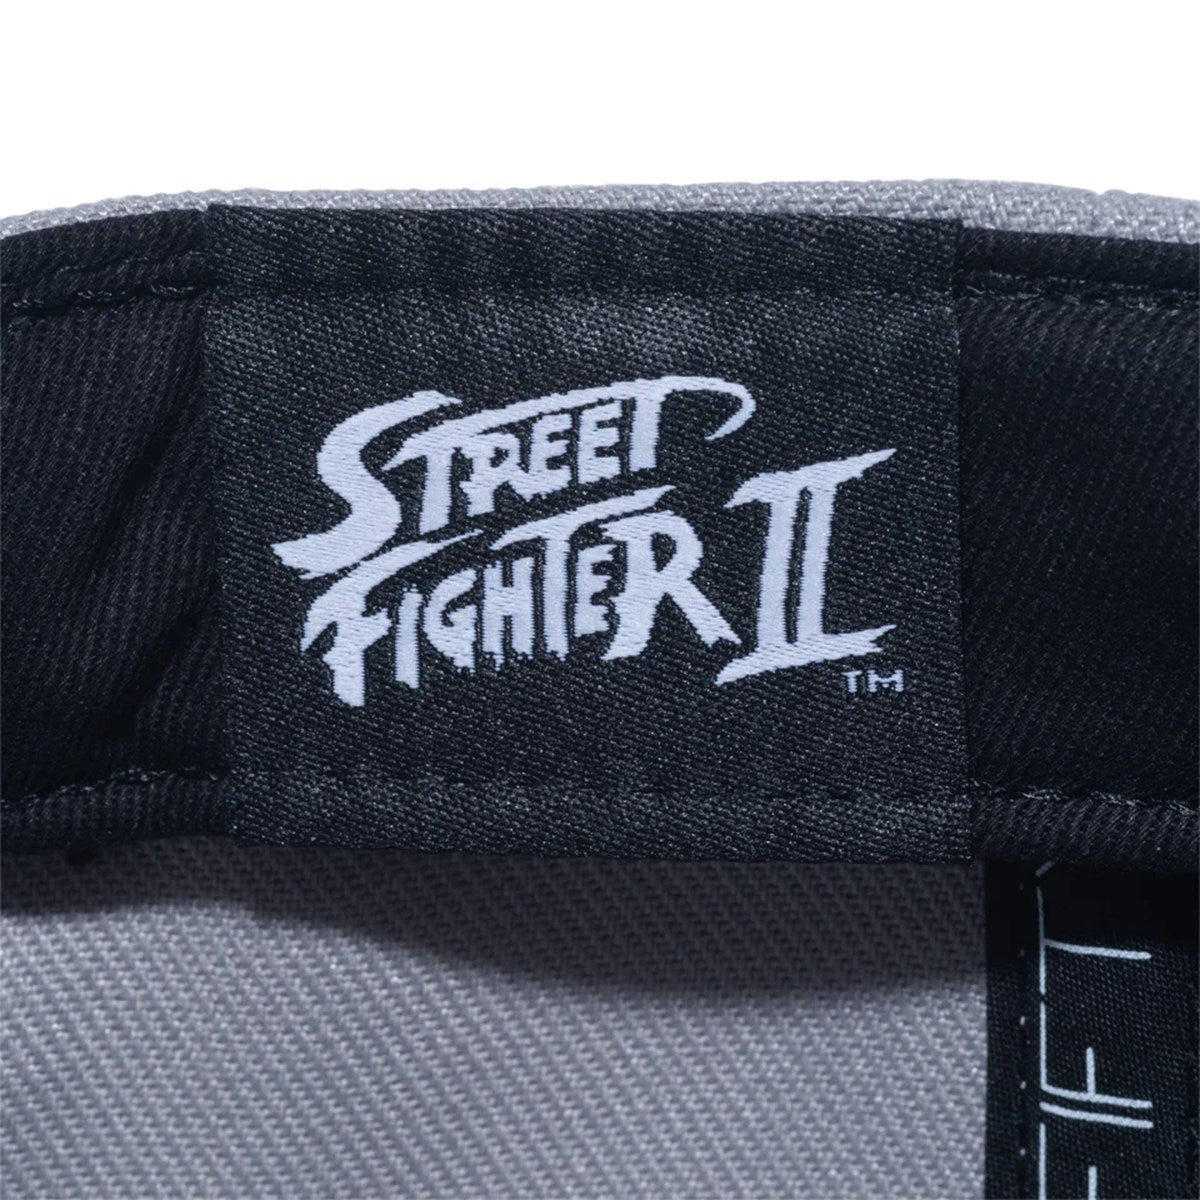 NEW ERA × STREET FIGHTER II - 9FIFTY SF2 RYU ストリートファイター2 リュウ GRY BLK【14125281】